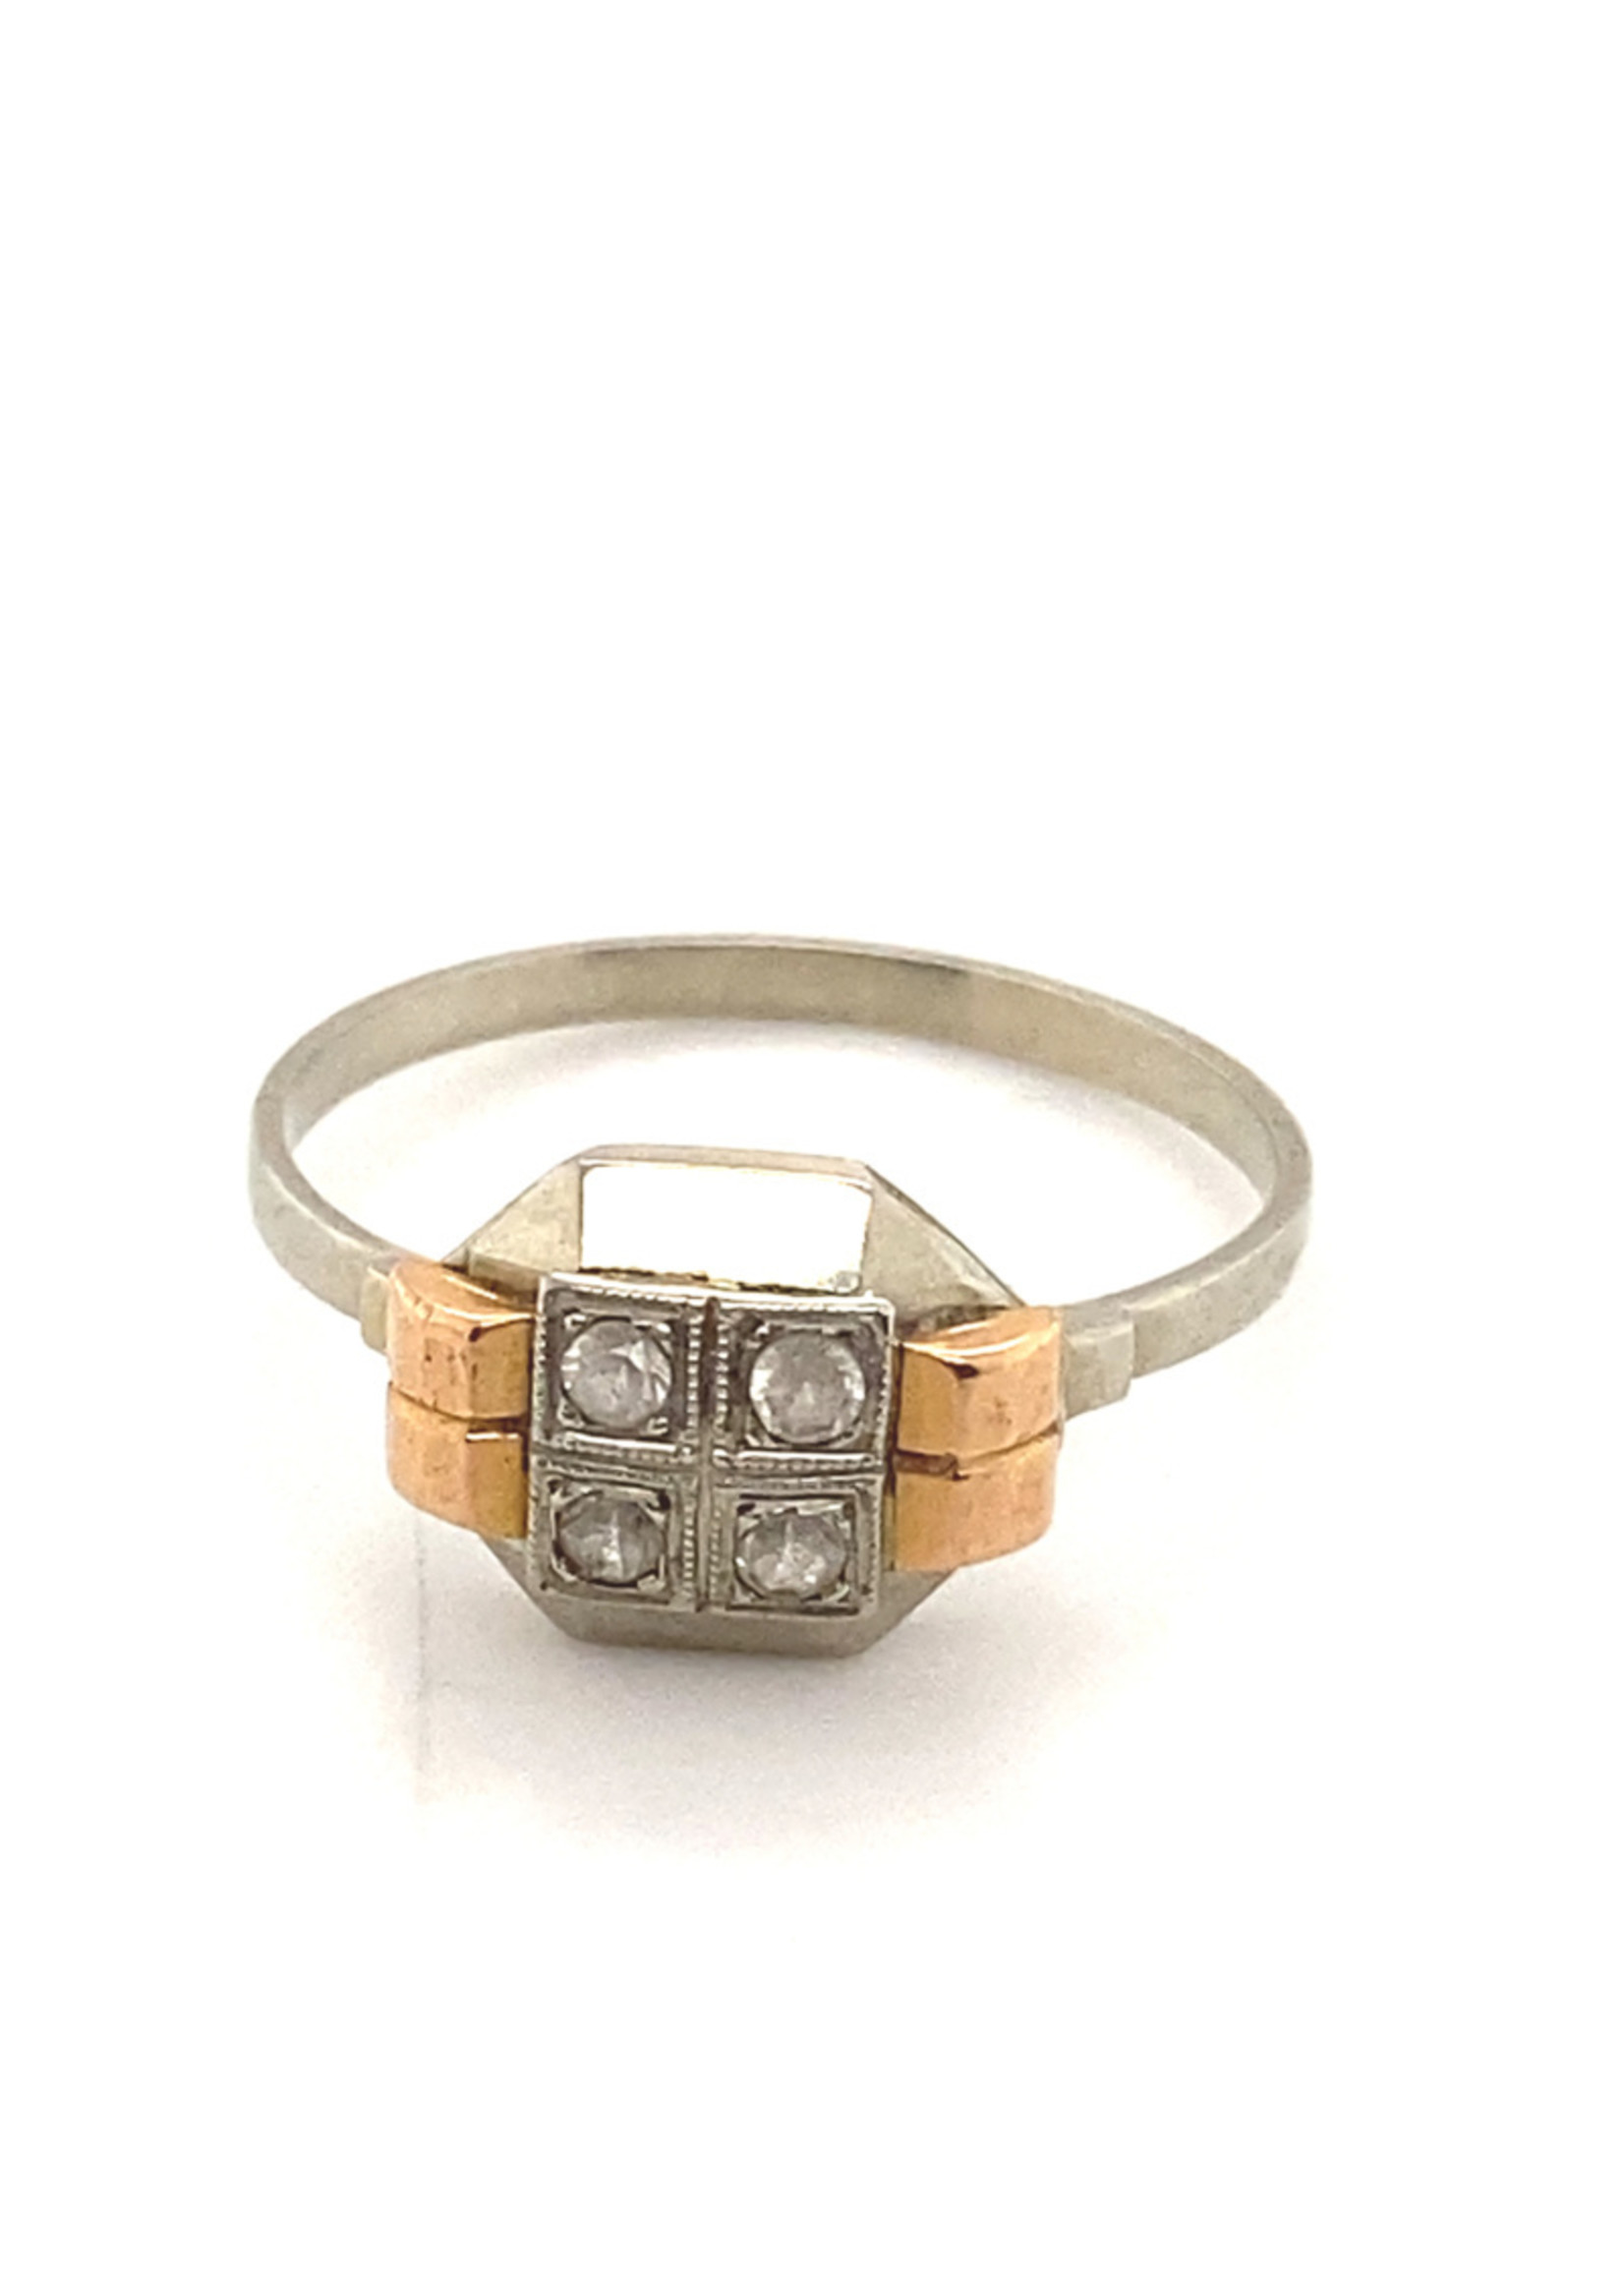 Vintage & Occasion Occasion bicolor gouden facet ring met achtkant diamantjes